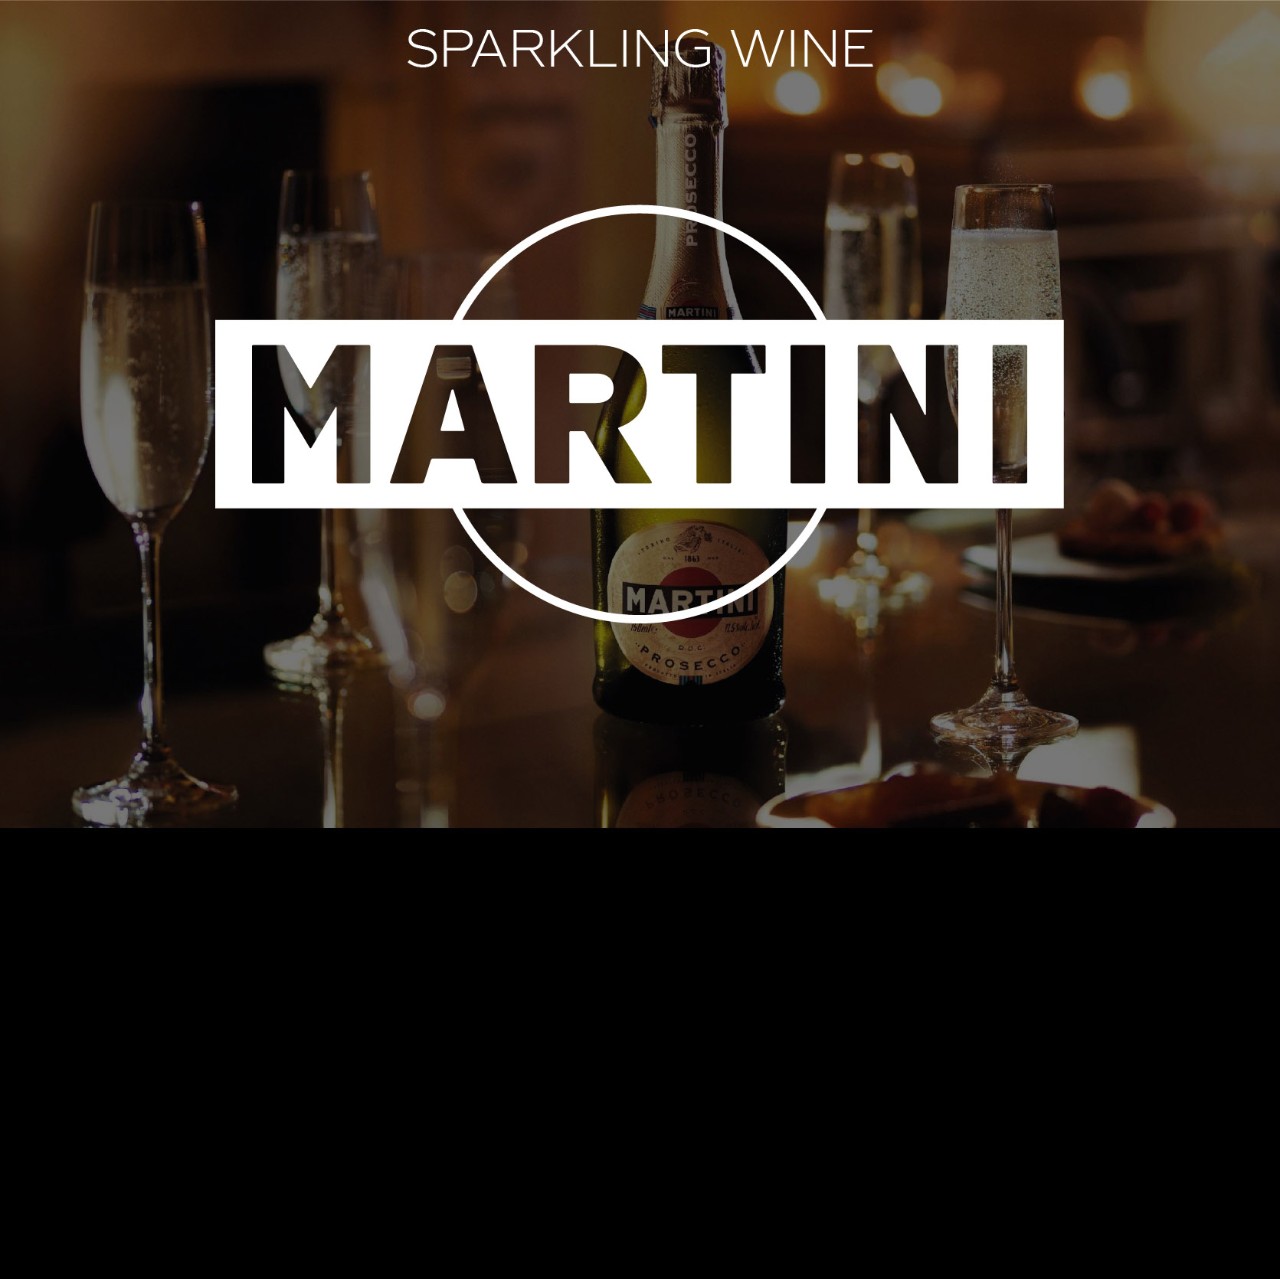 Šumivá vína Martini